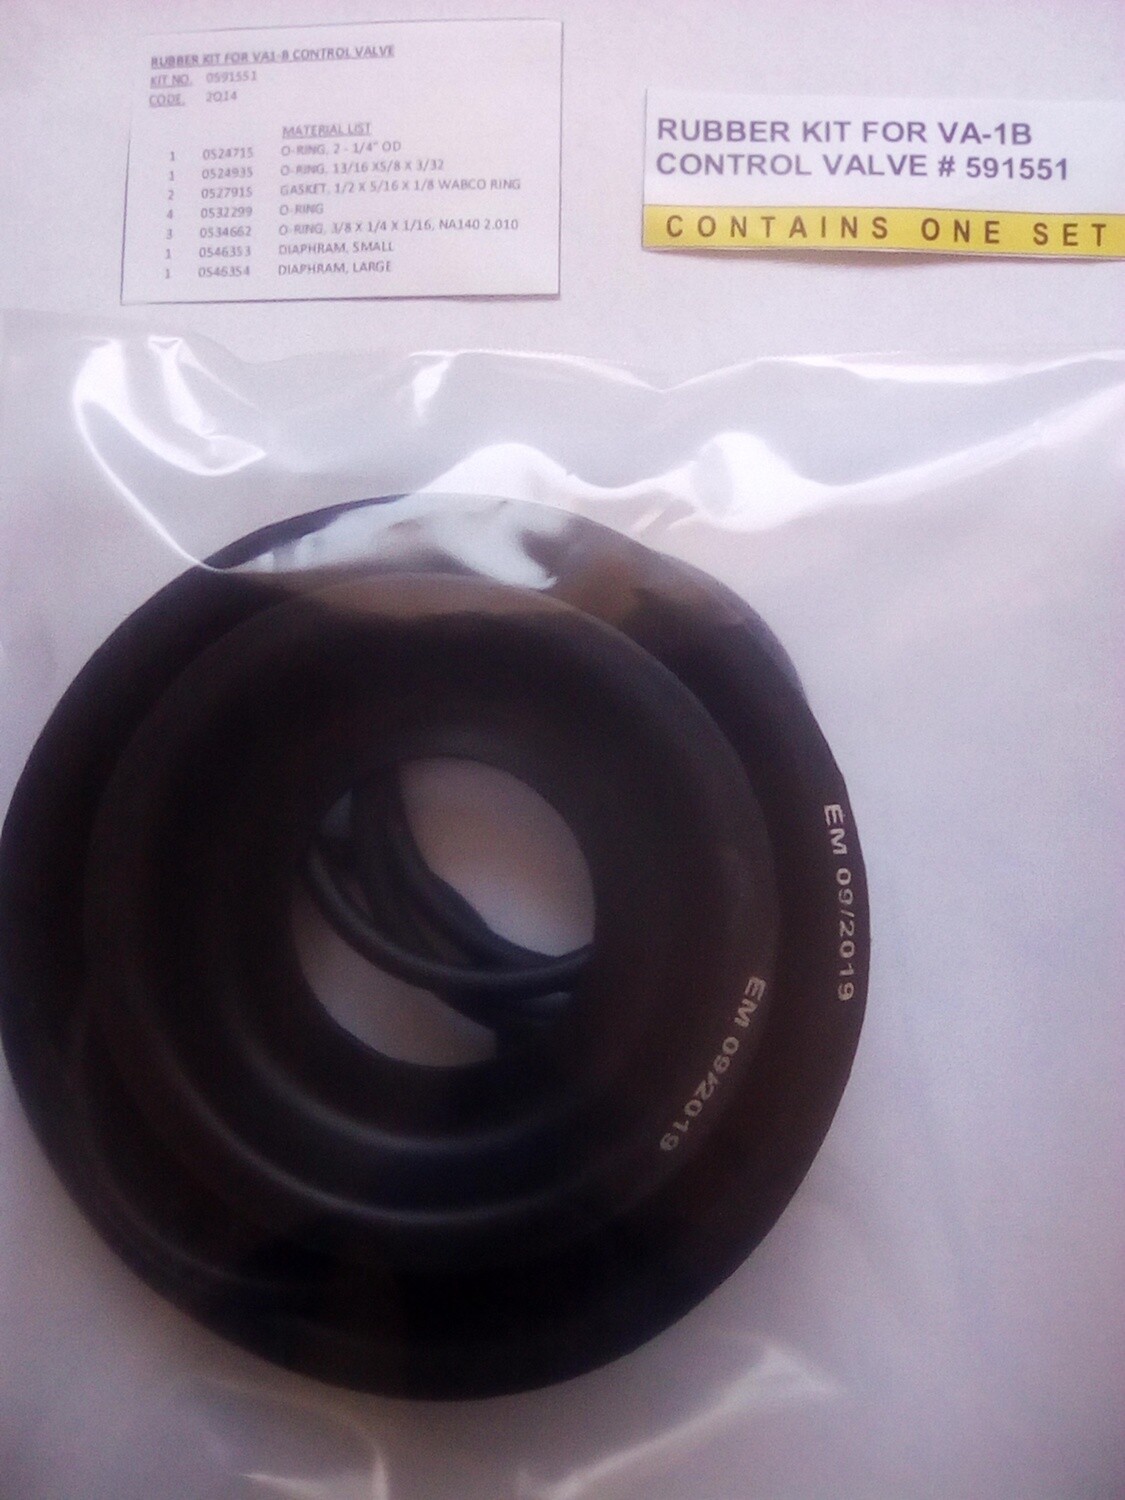 VA1-B rubber valve repair kit 591551